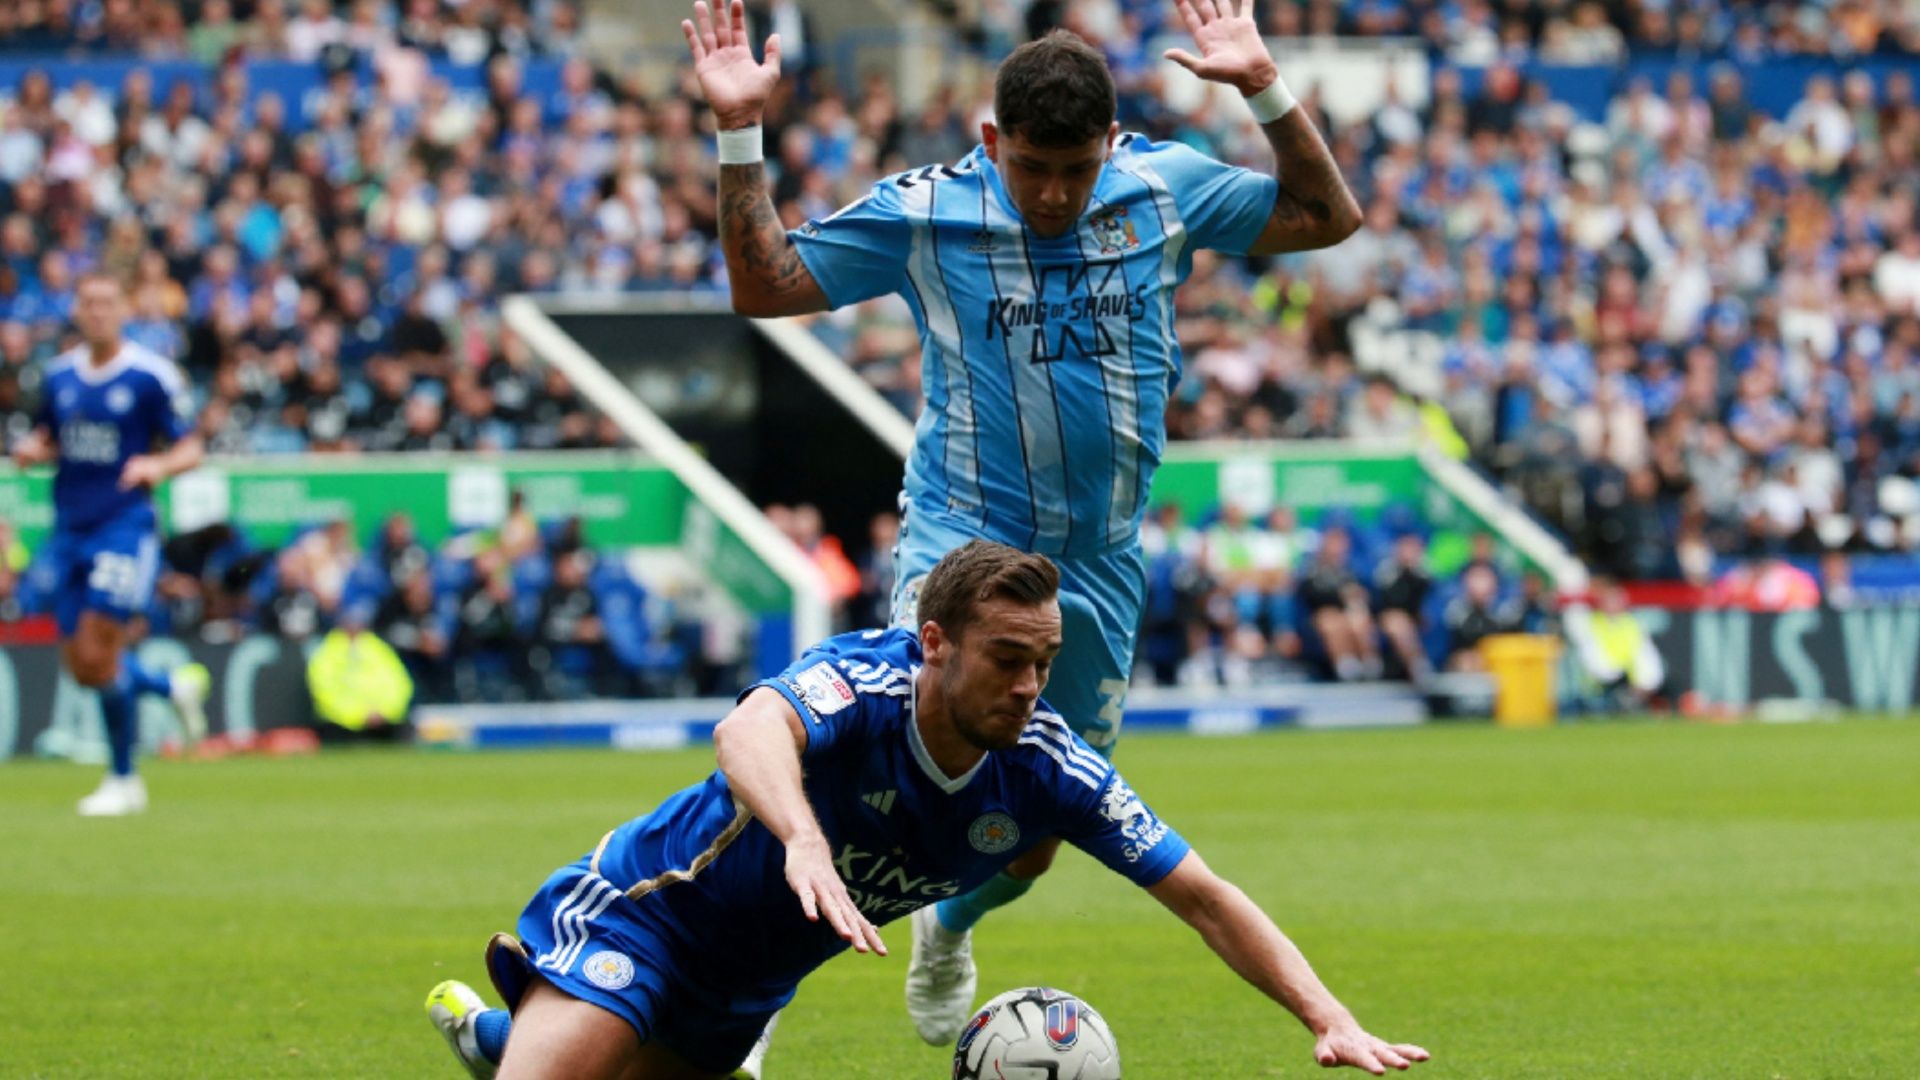 Leicester City midfielder Harry Winks